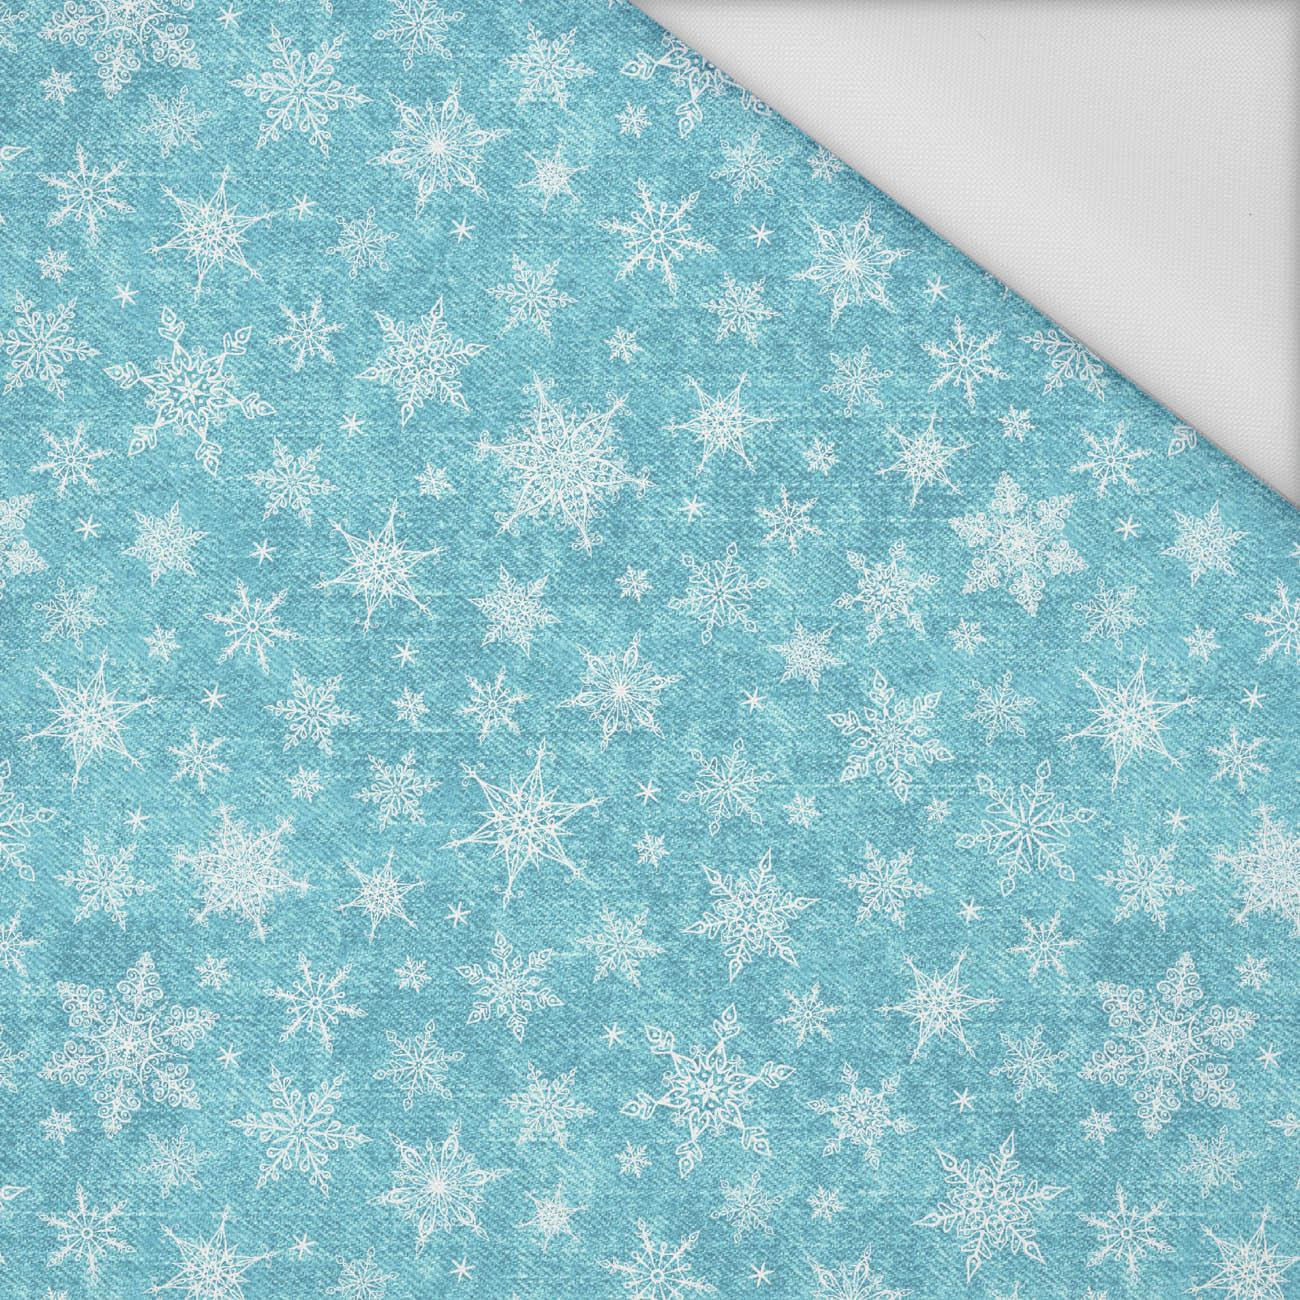 SNOWFLAKES PAT. 2 / ACID WASH SEA BLUE - Waterproof woven fabric